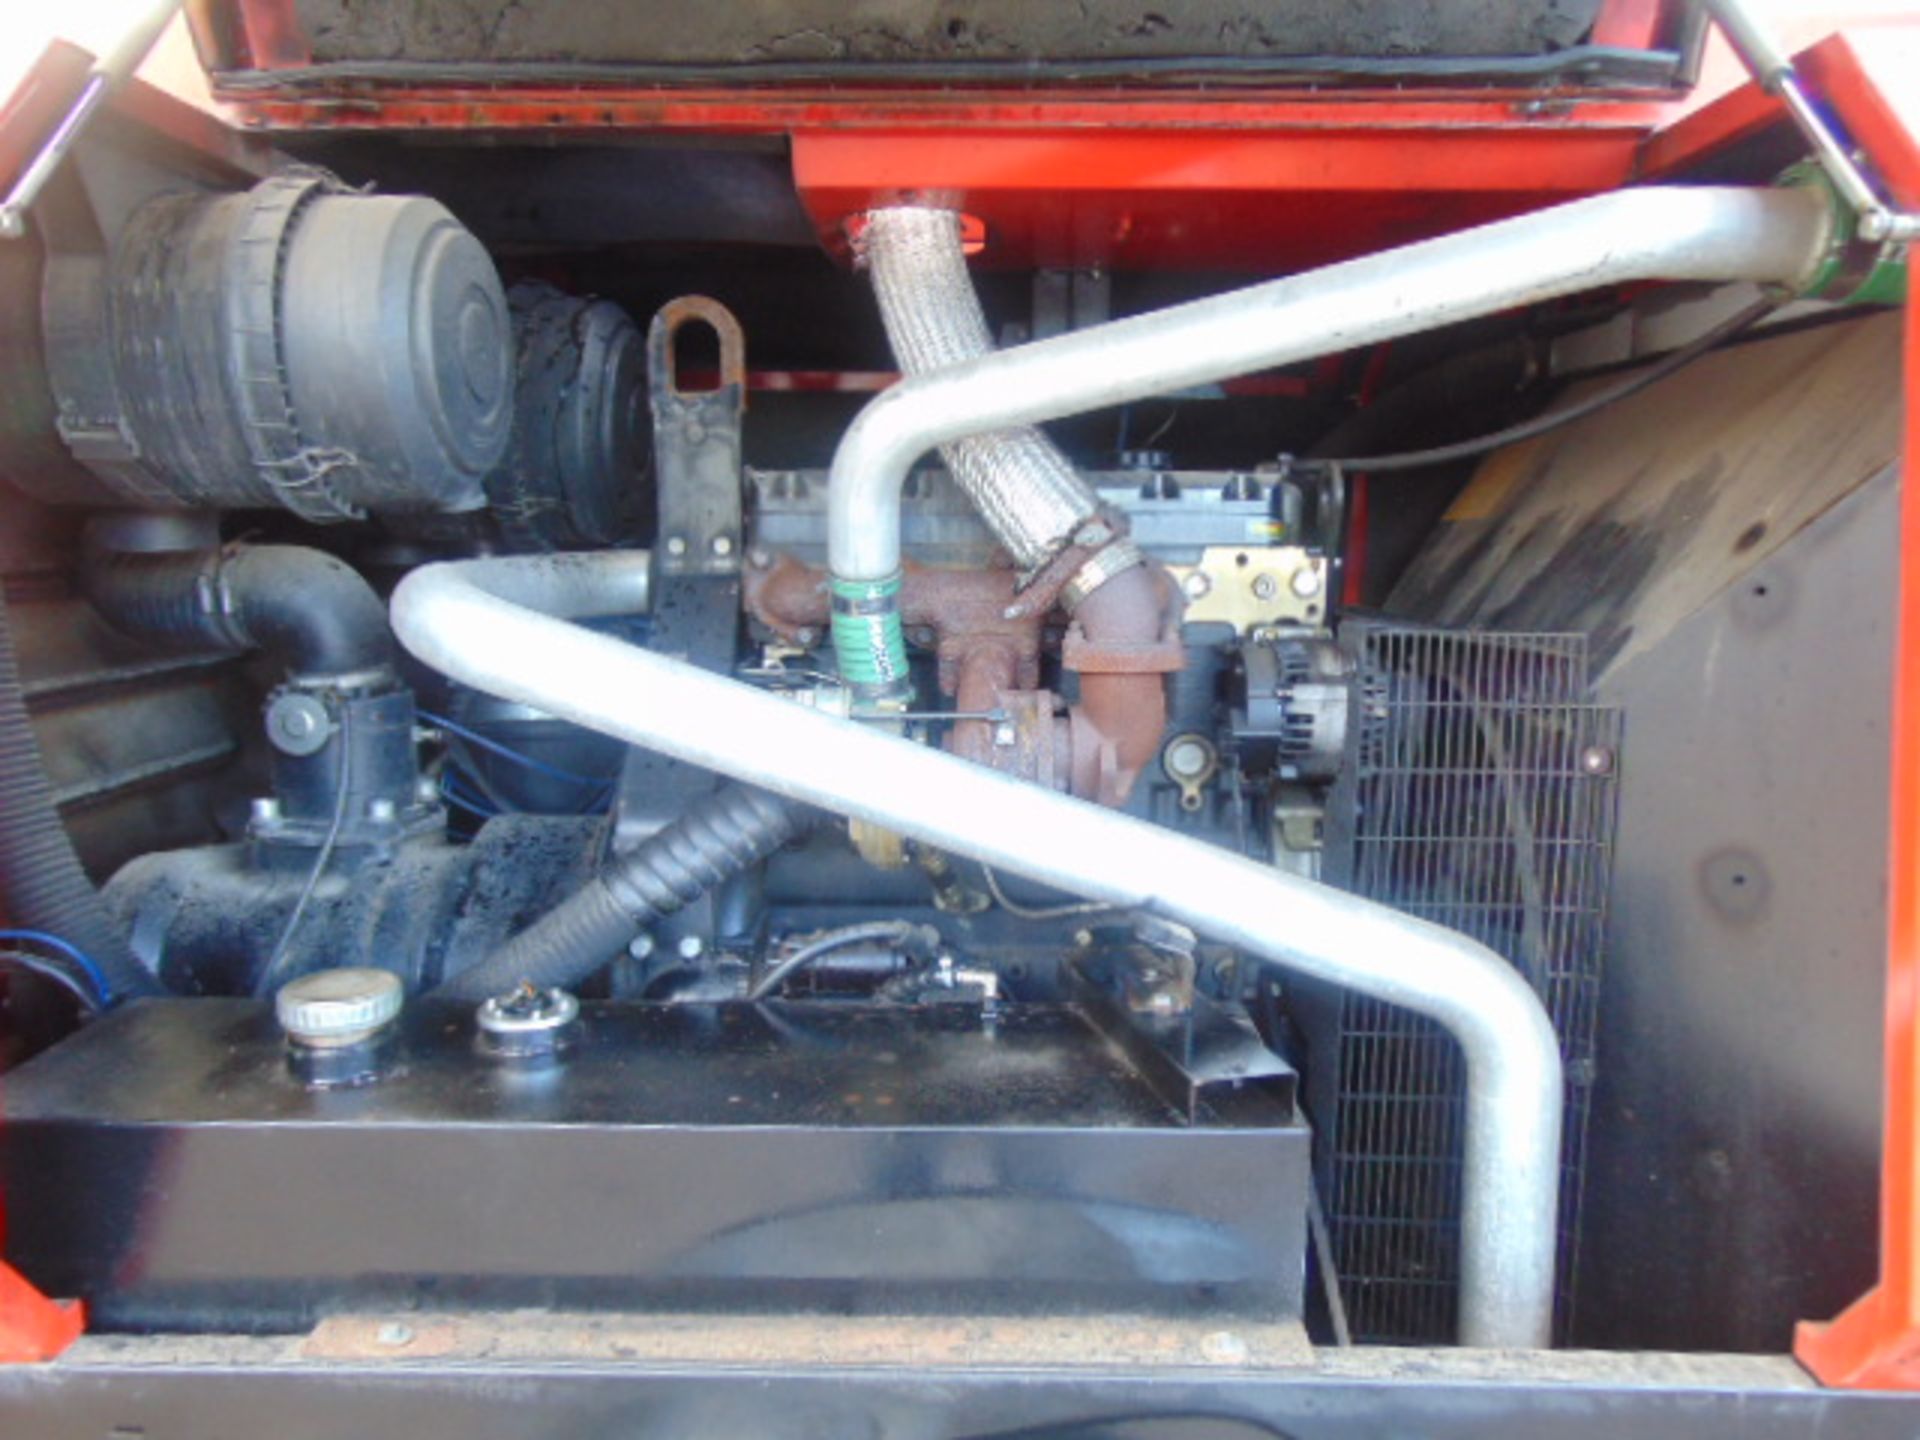 2012 Rotair MDVS 105 P Portable Super Silent Perkins Diesel Air Compressor - Image 14 of 22